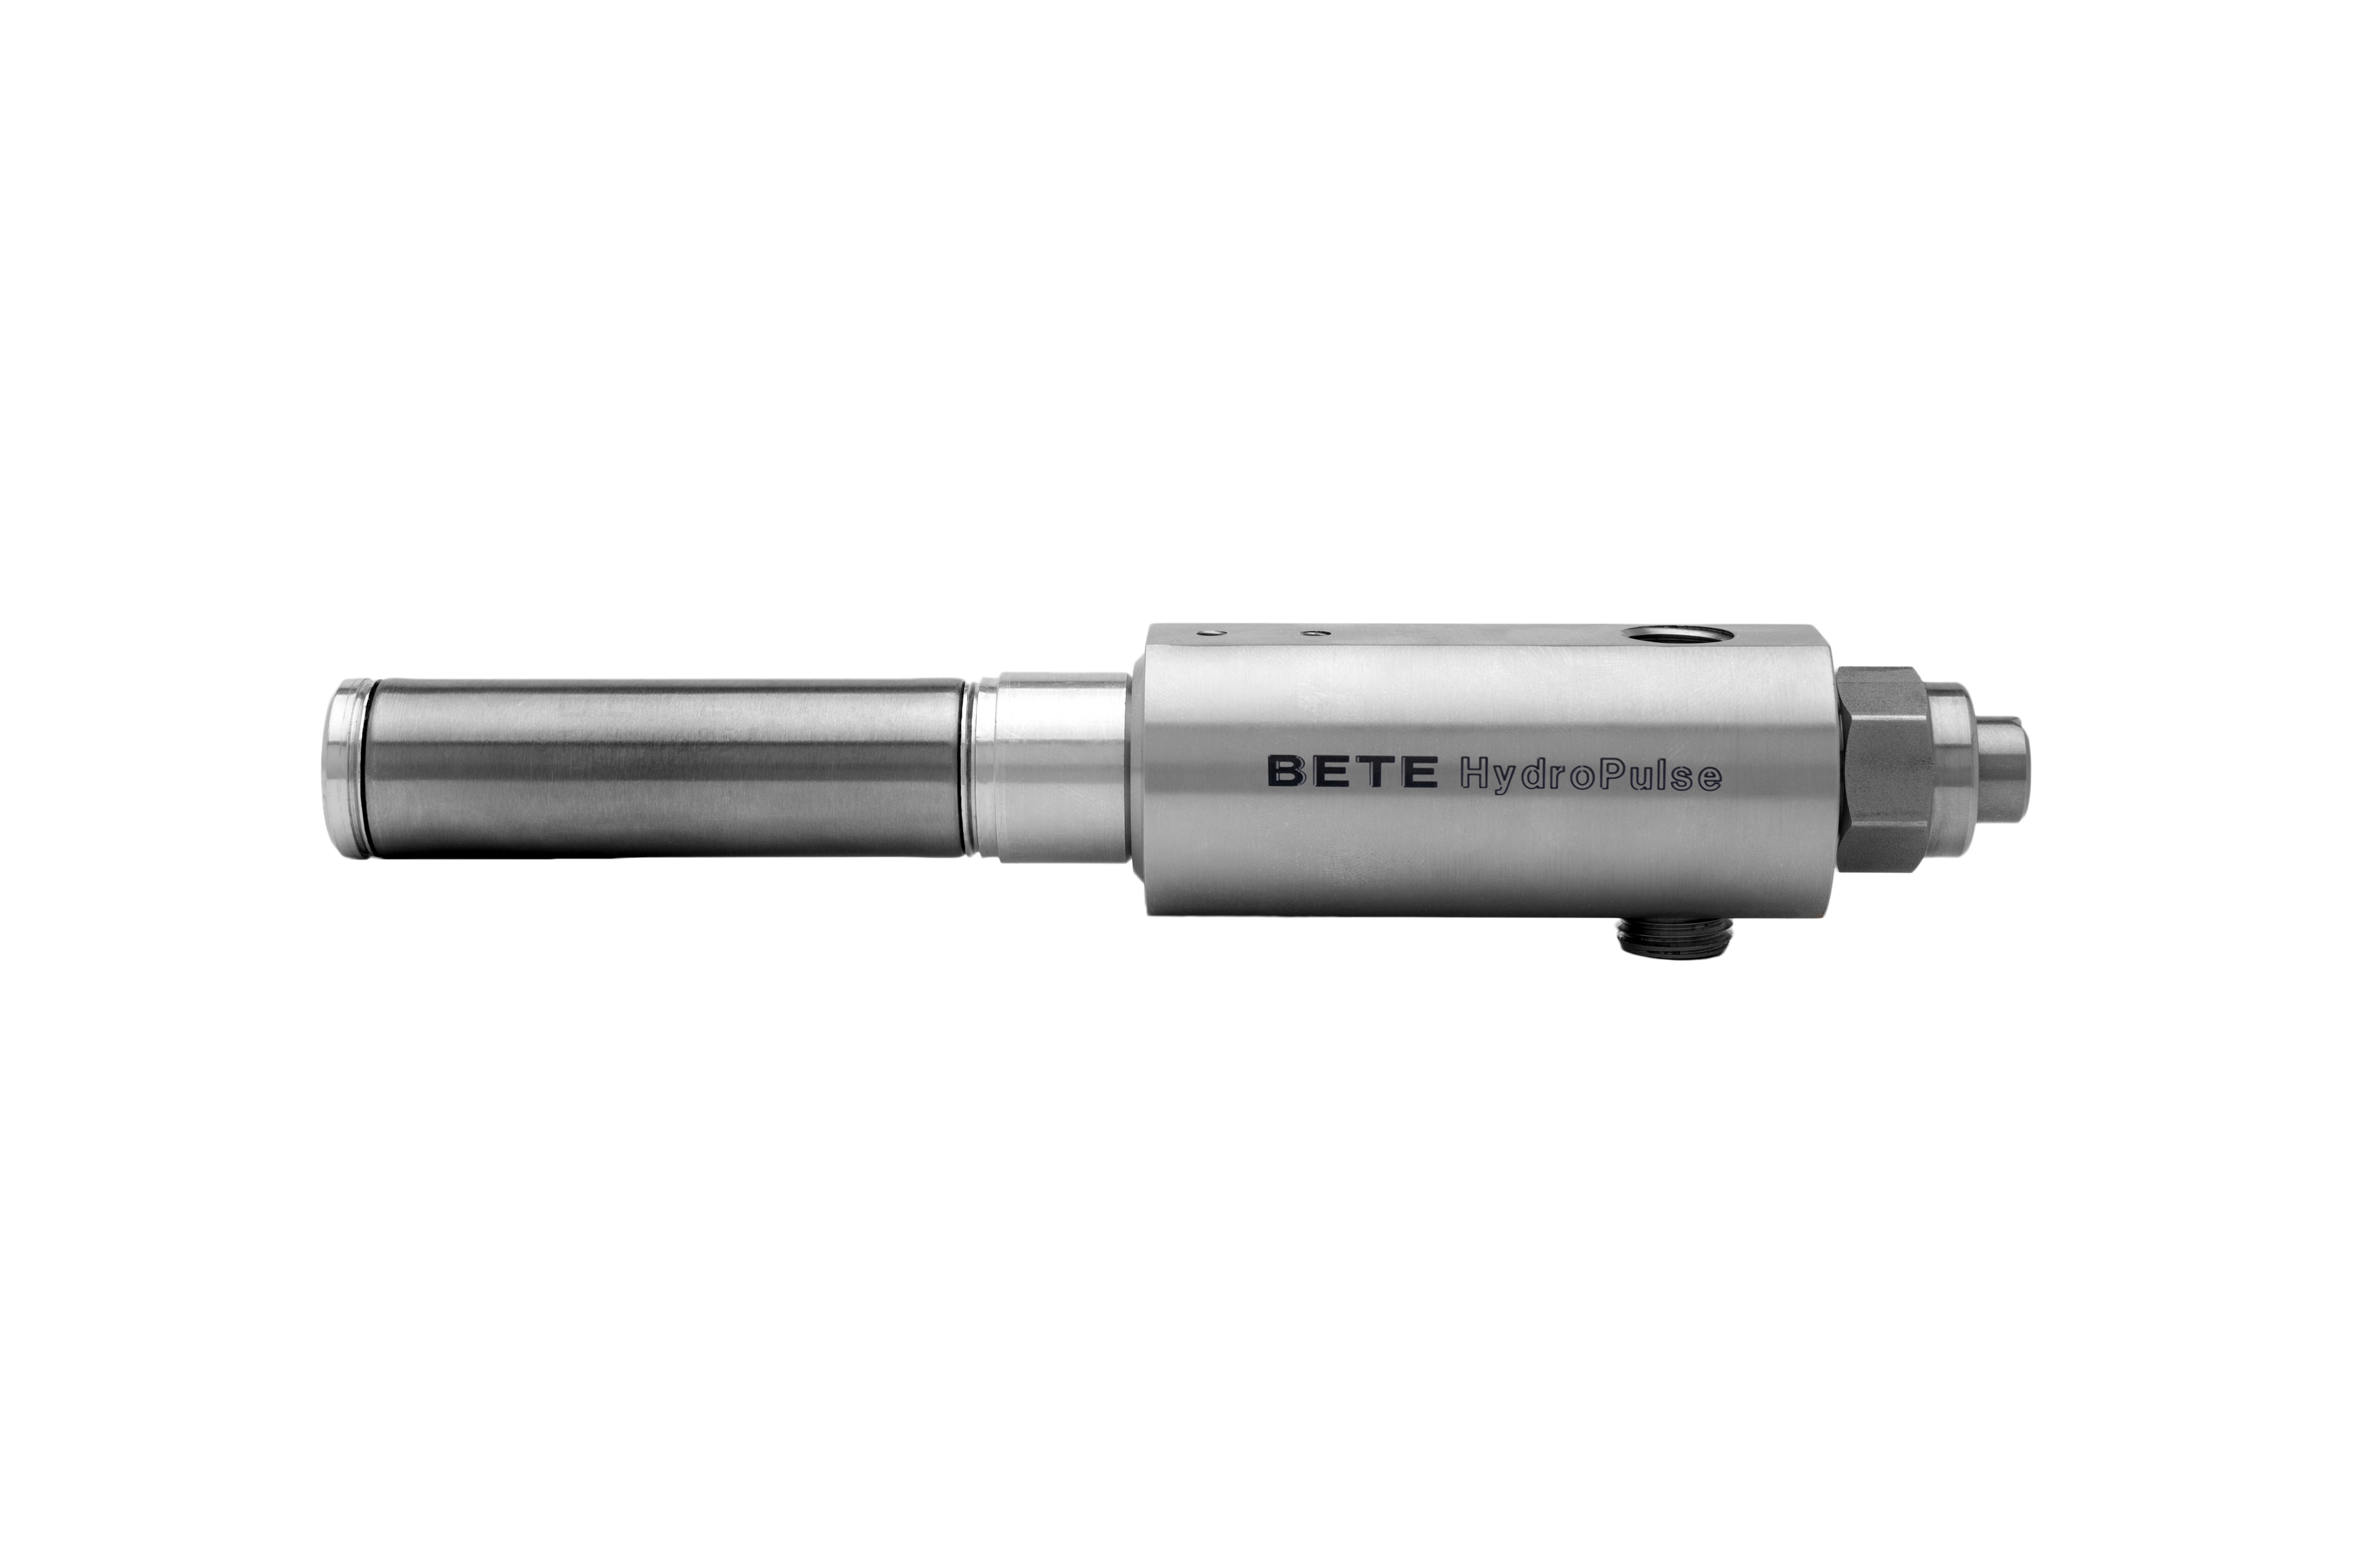 BETE's new HydroPulse nozzle